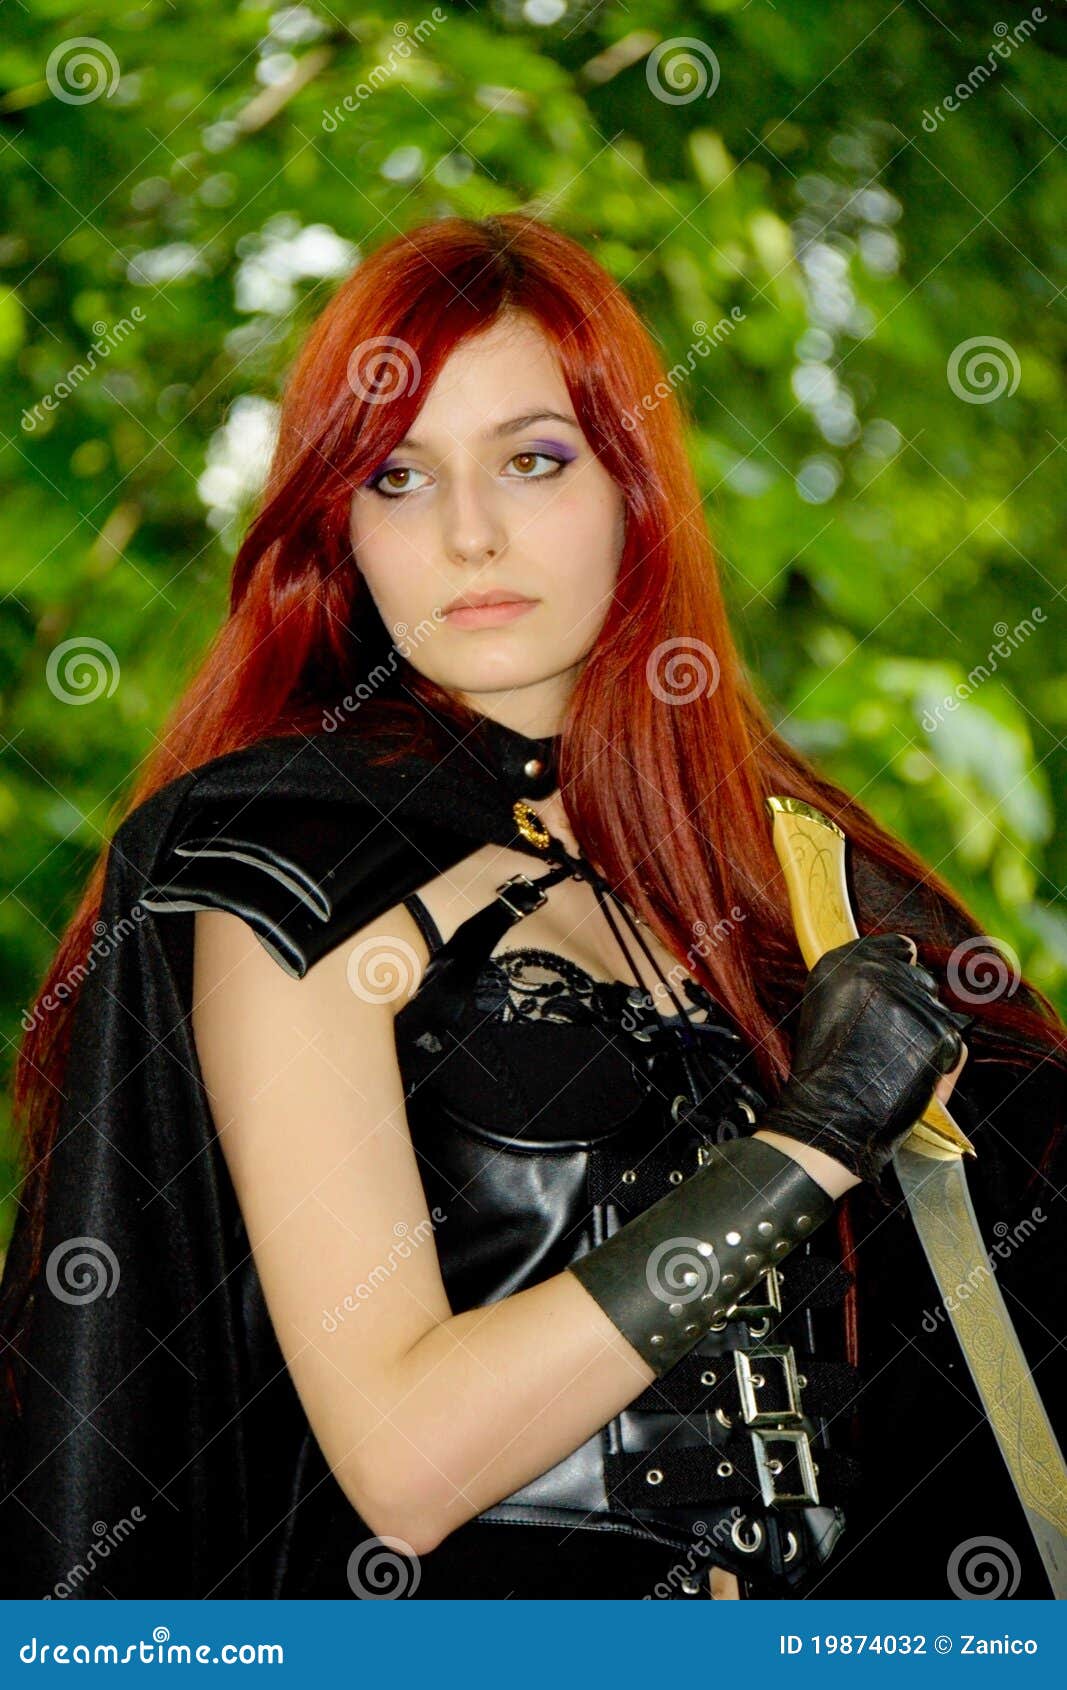 women Medieval cosplay